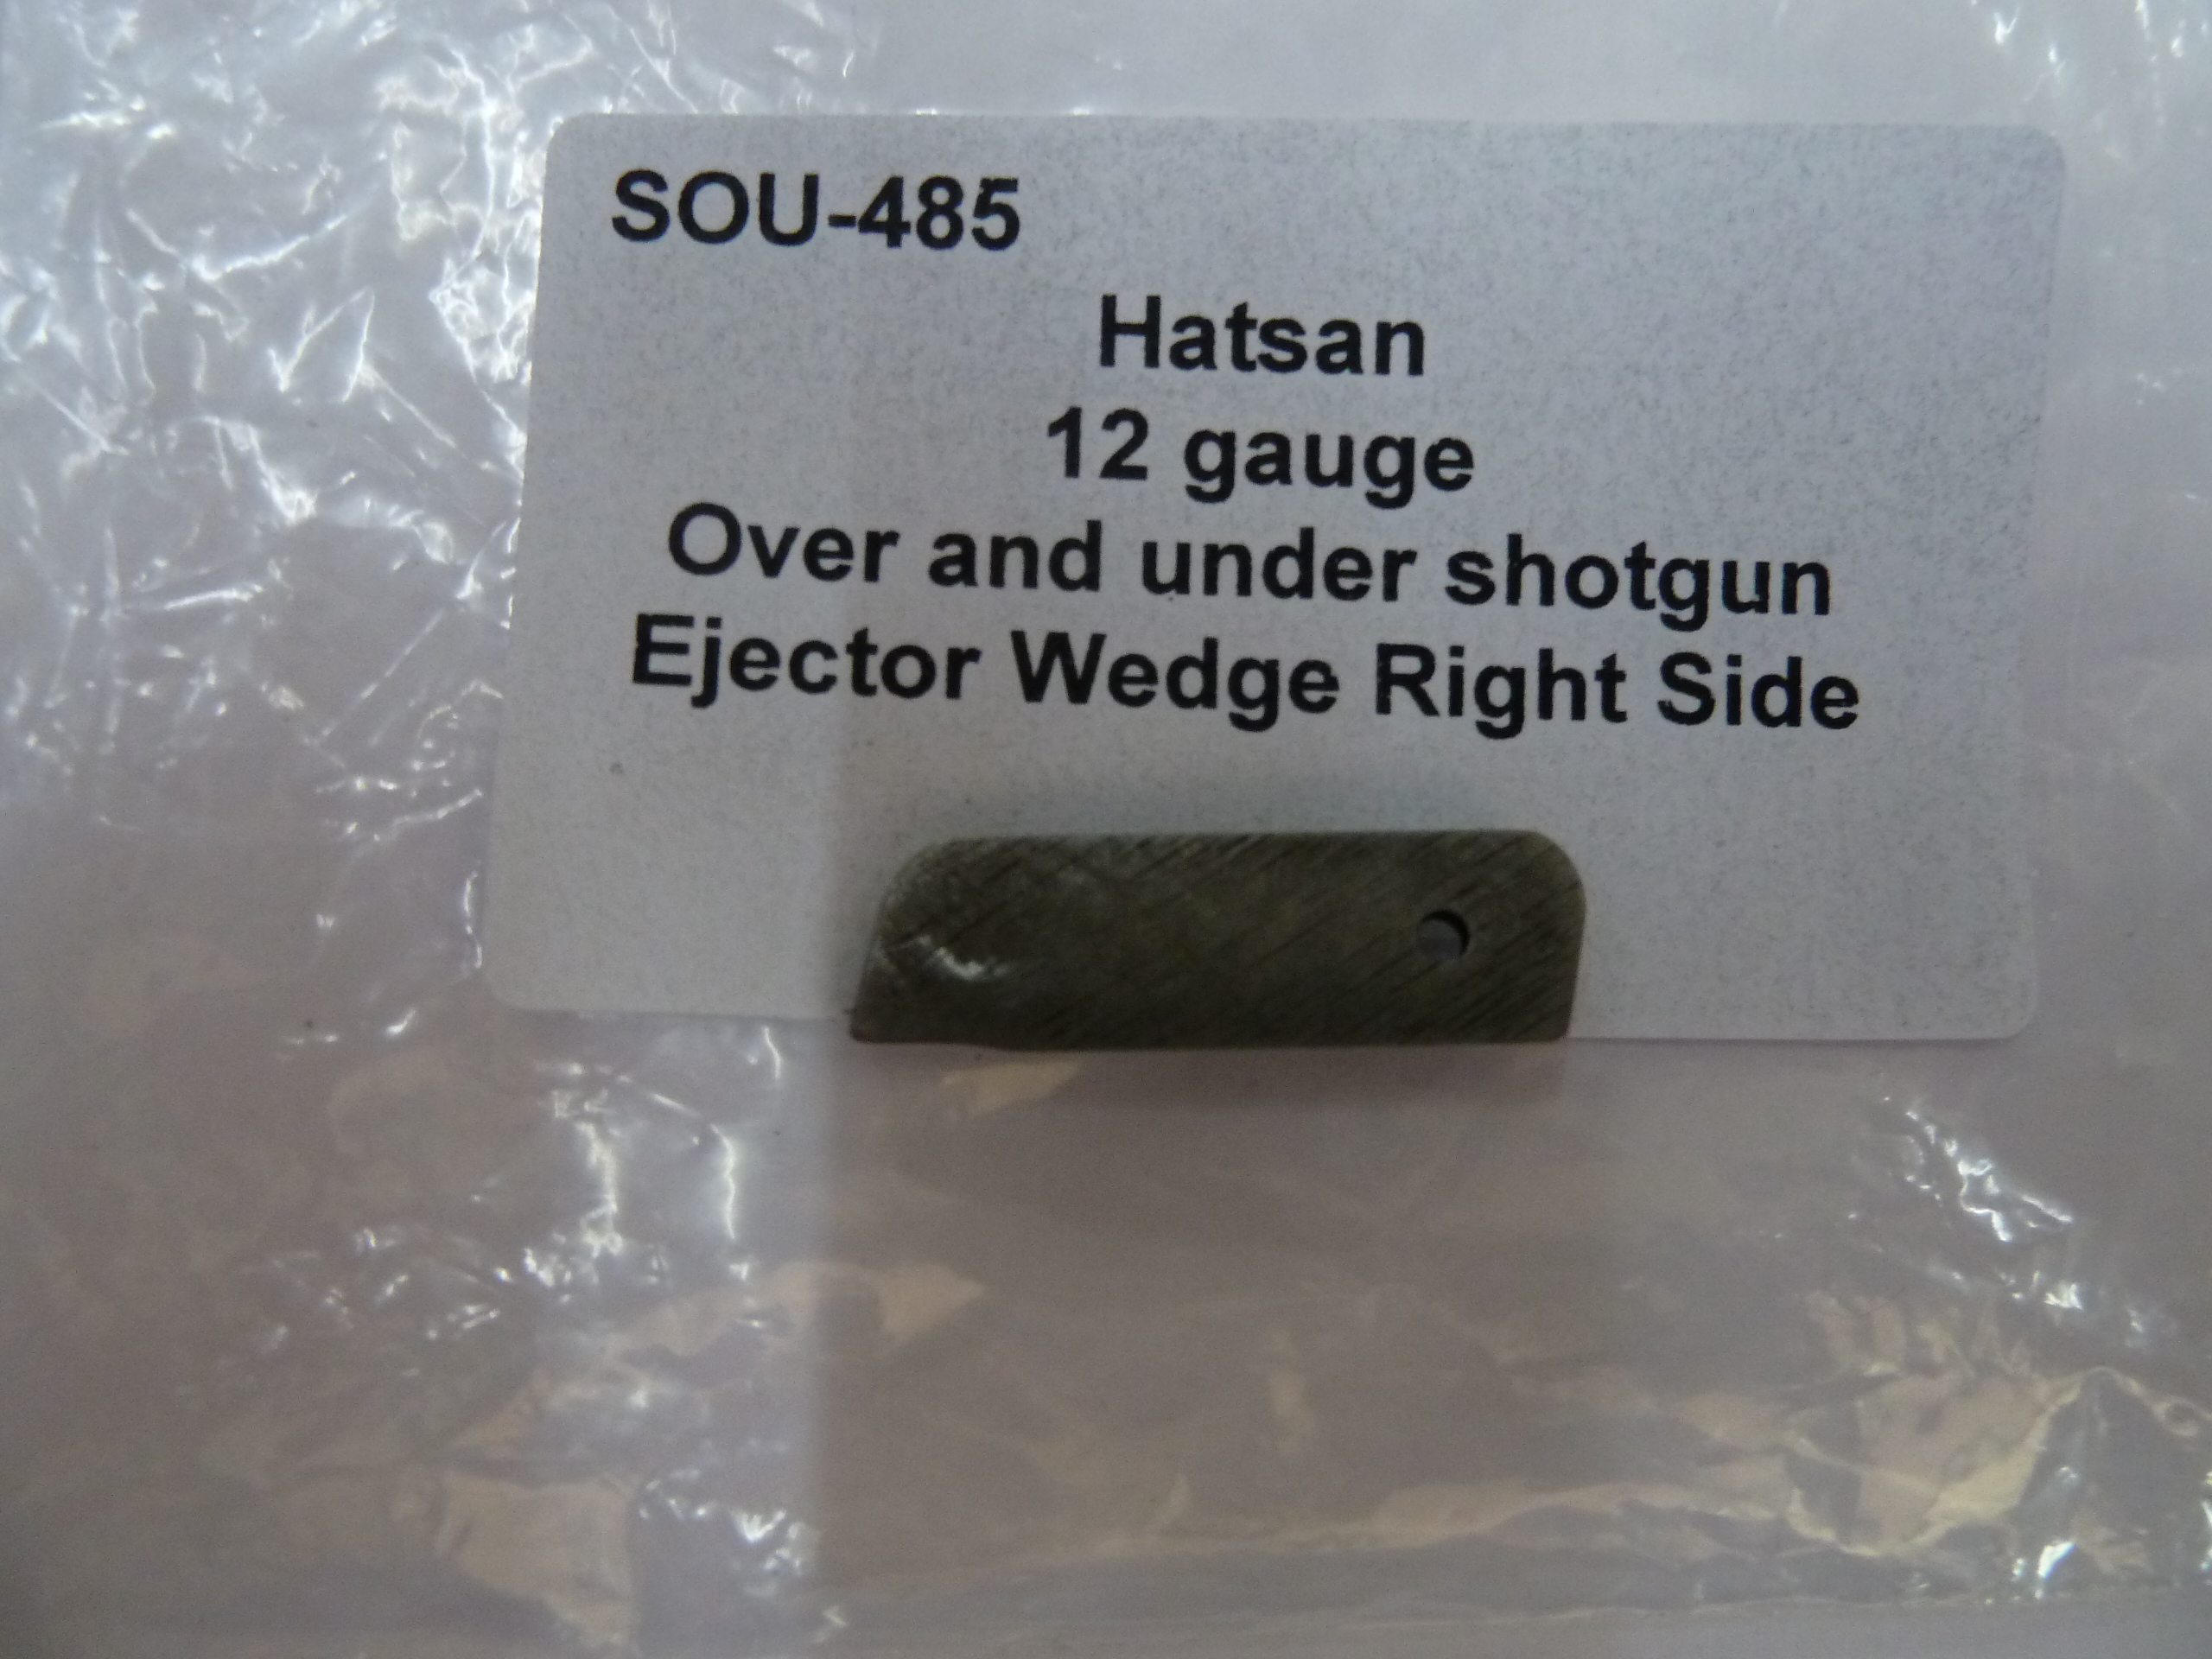 SOU-485 Hatsan 12 gauge over and under shotgun ejector wedge right side (2)